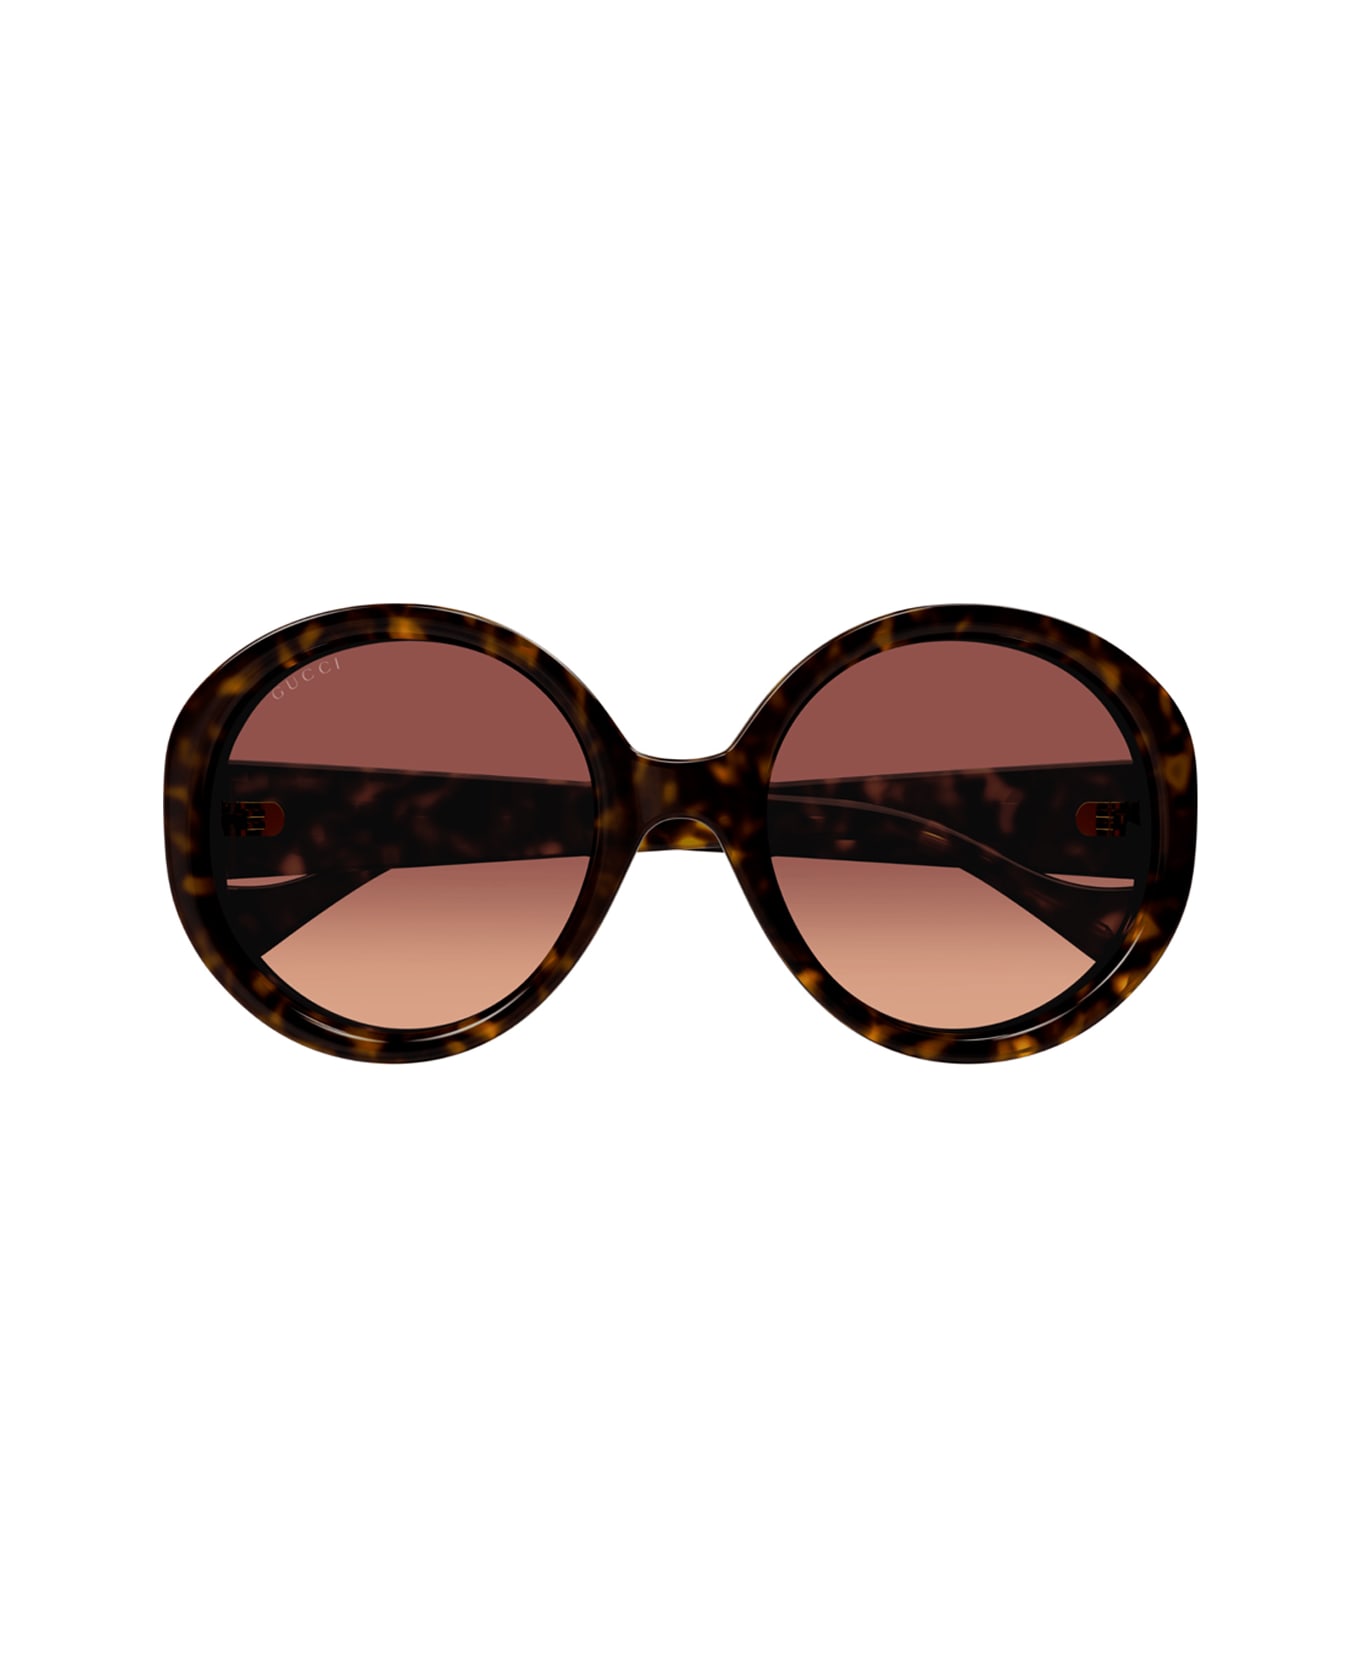 Gucci Eyewear Gg1256s Sunglasses Sunglasses - 002 HAVANA HAVANA RED